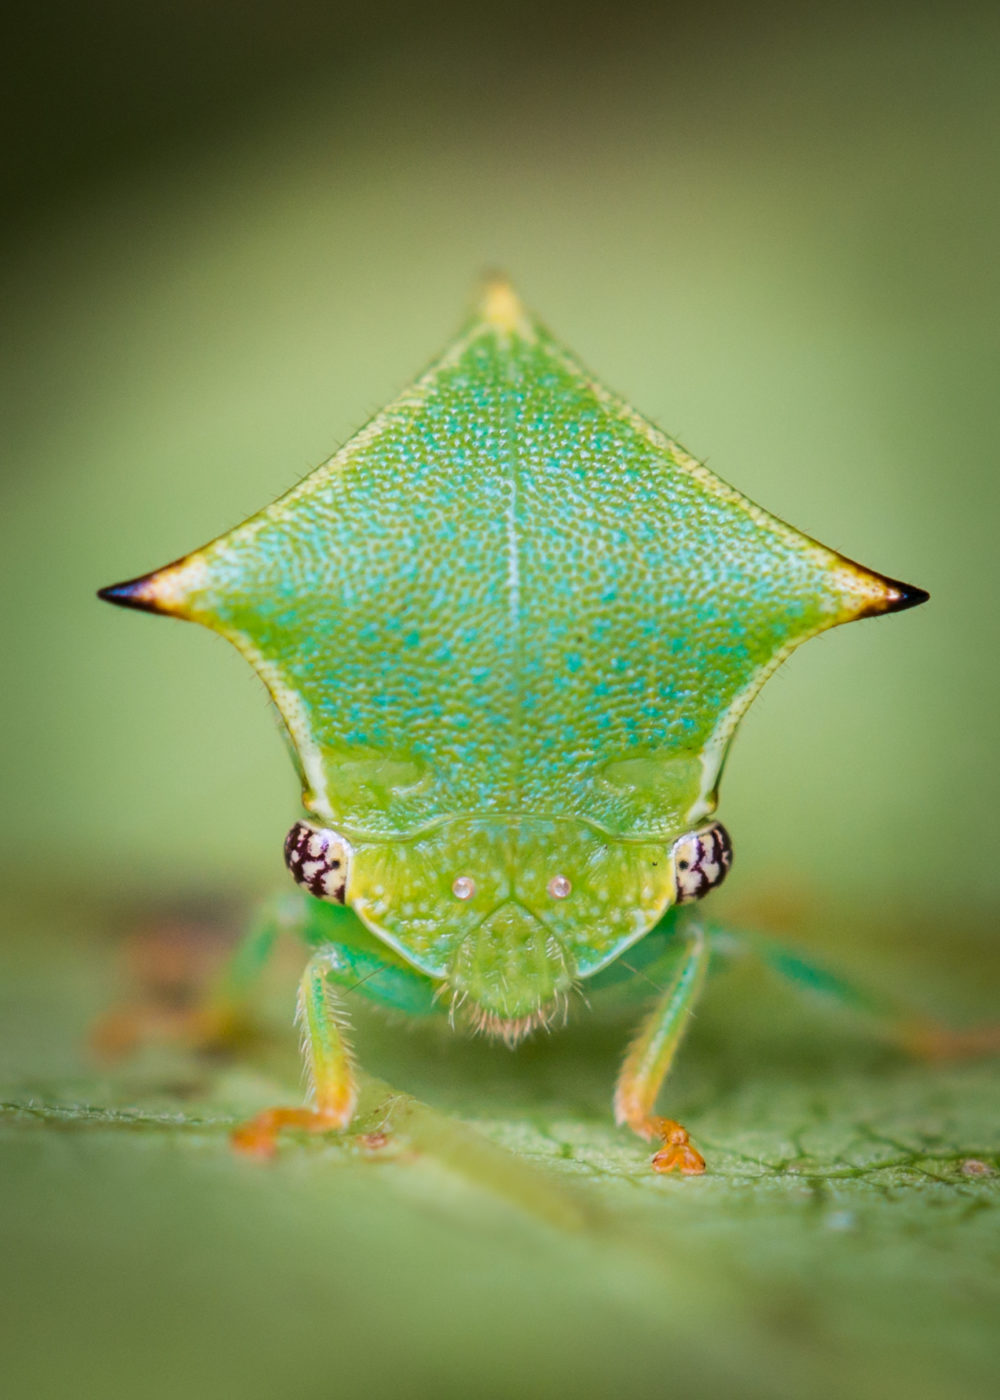 Treehopper on a vine leaf